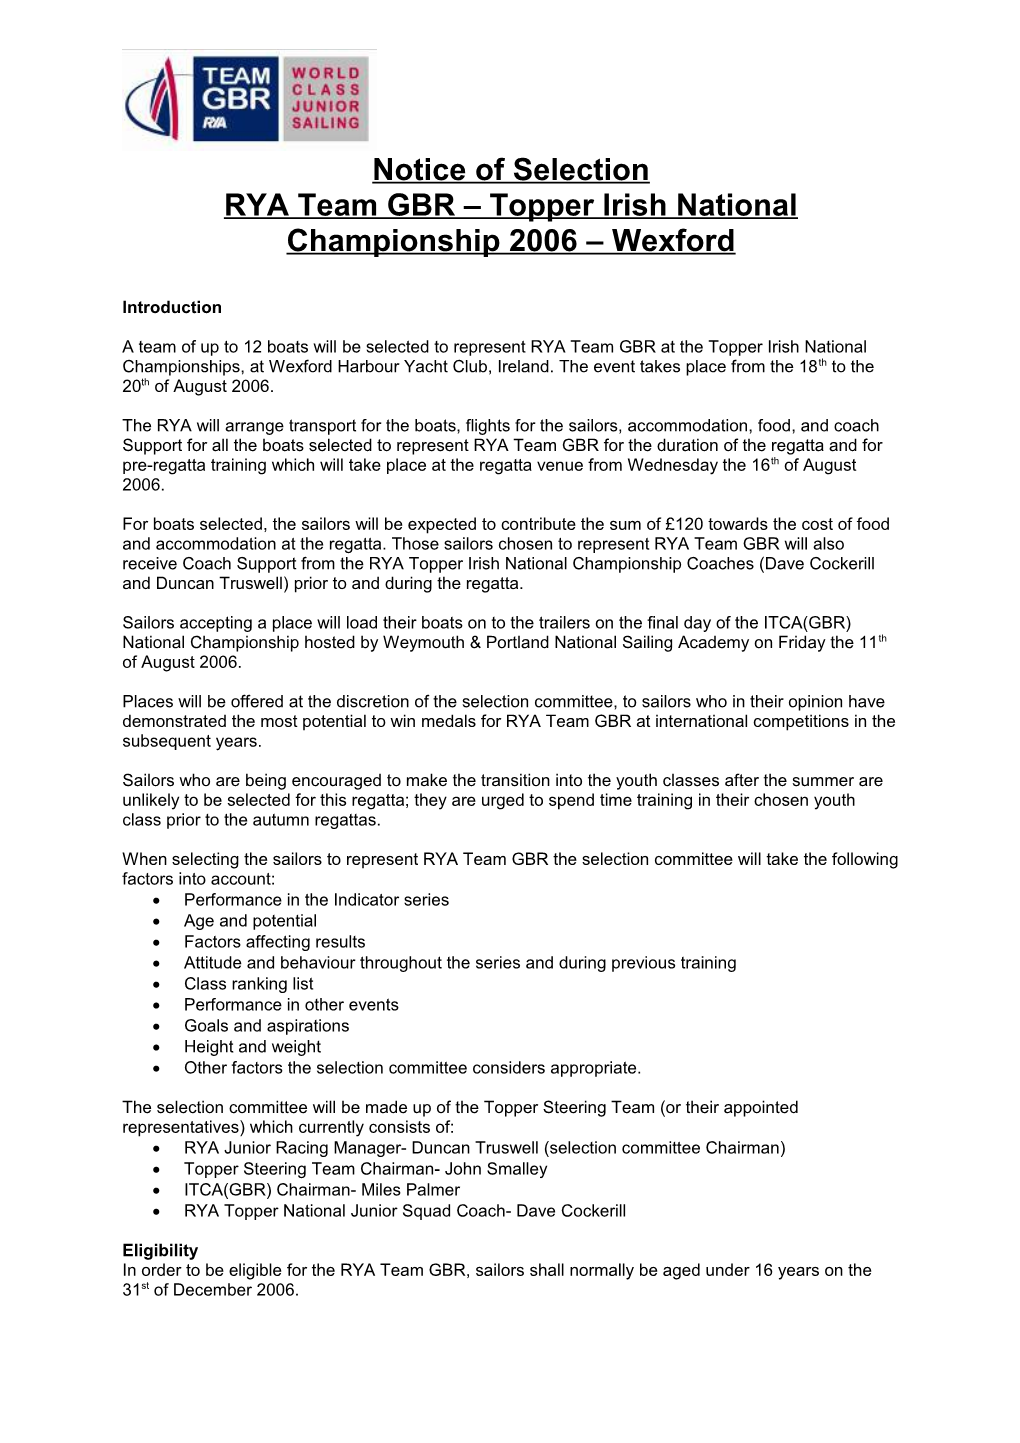 RYA Team GBR Topper Irish National Championship2006 Wexford